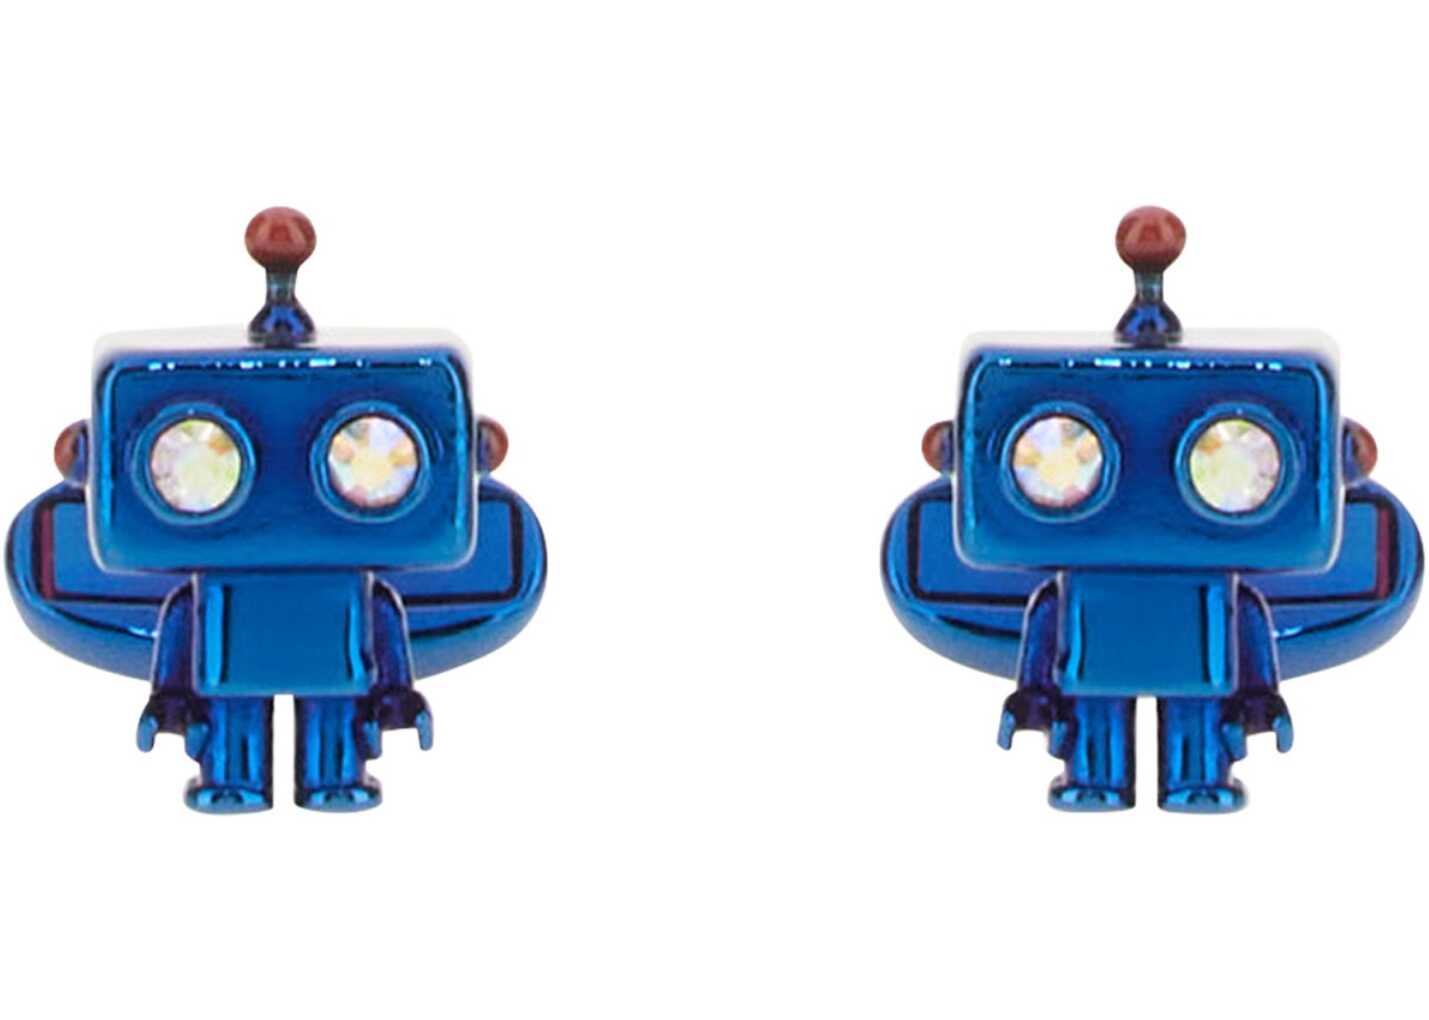 Paul Smith Twins Robot MULTICOLOUR image12